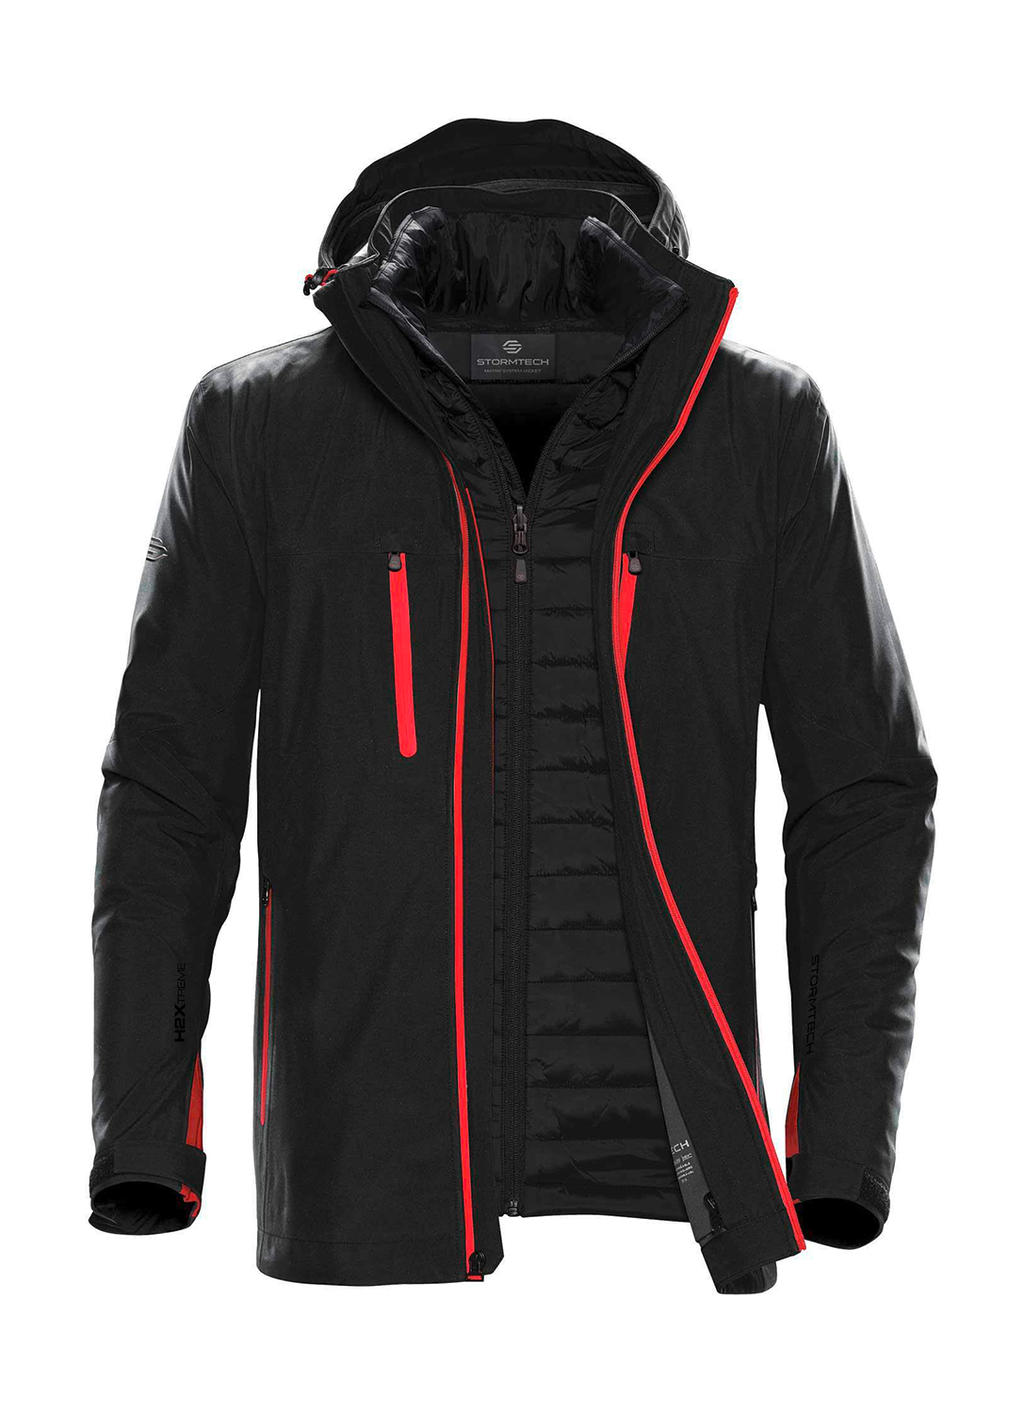  Mens Matrix System Jacket in Farbe Black/Bright Red